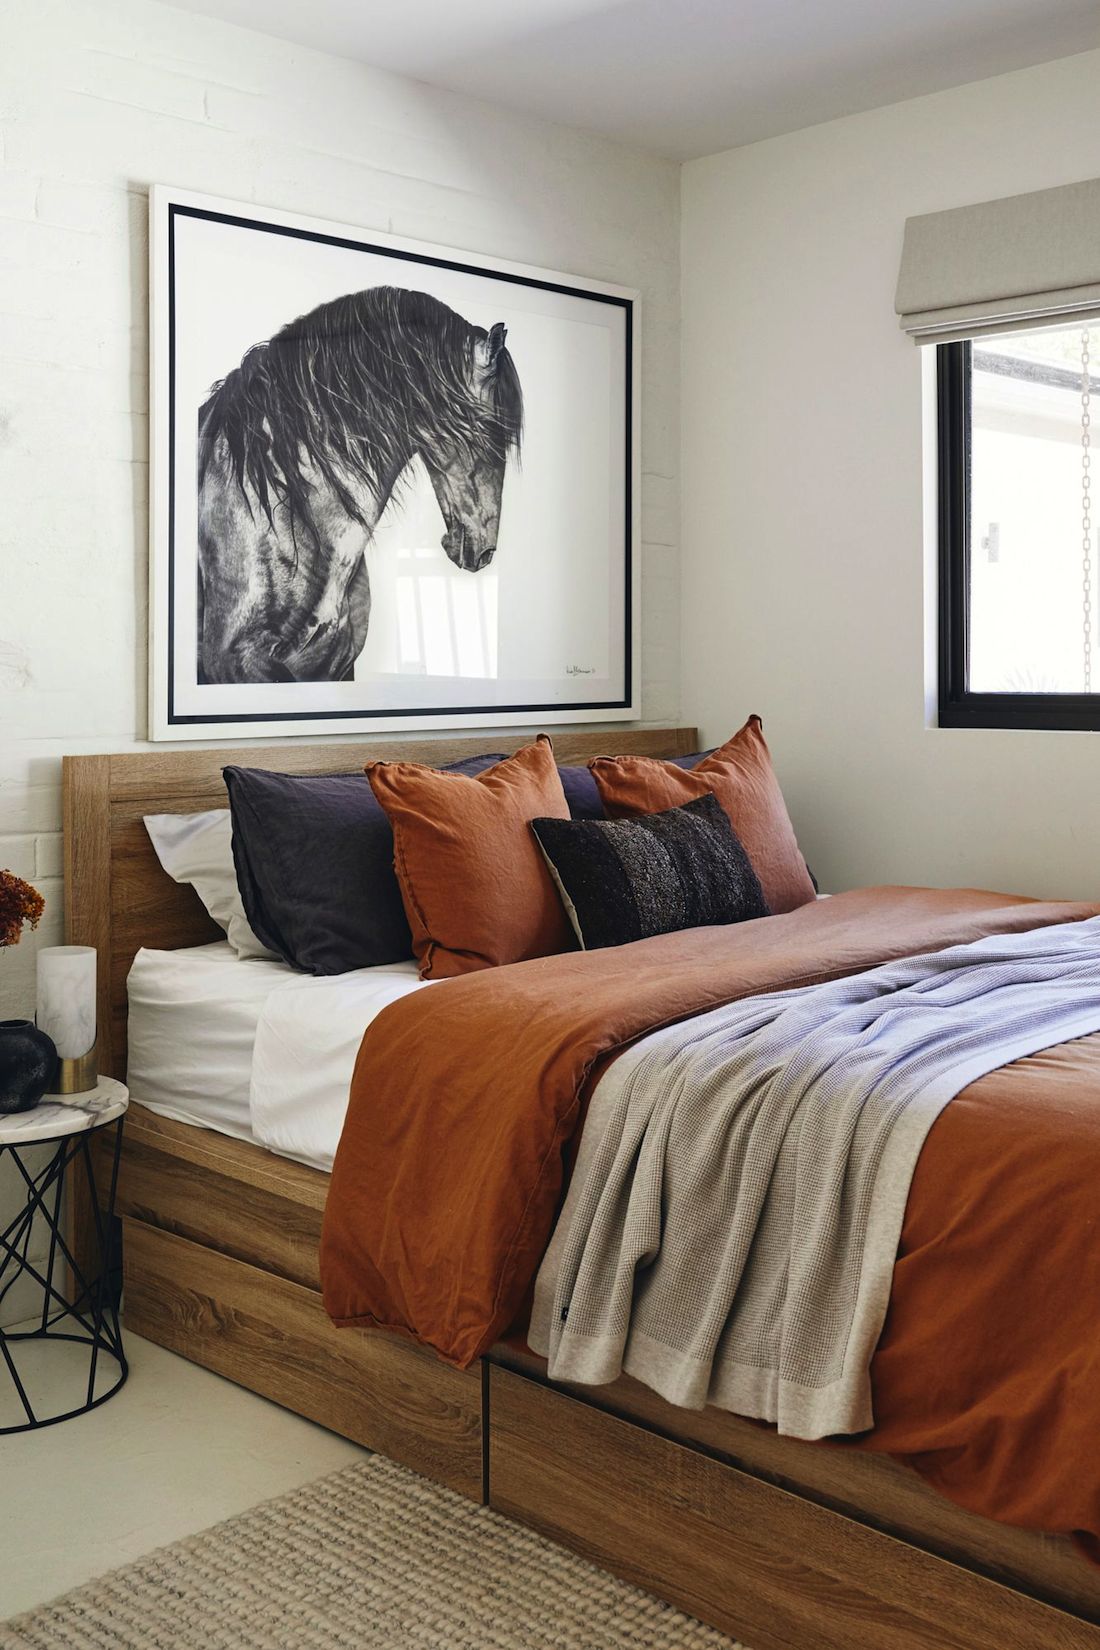 Terracotta bedding and horse artwork